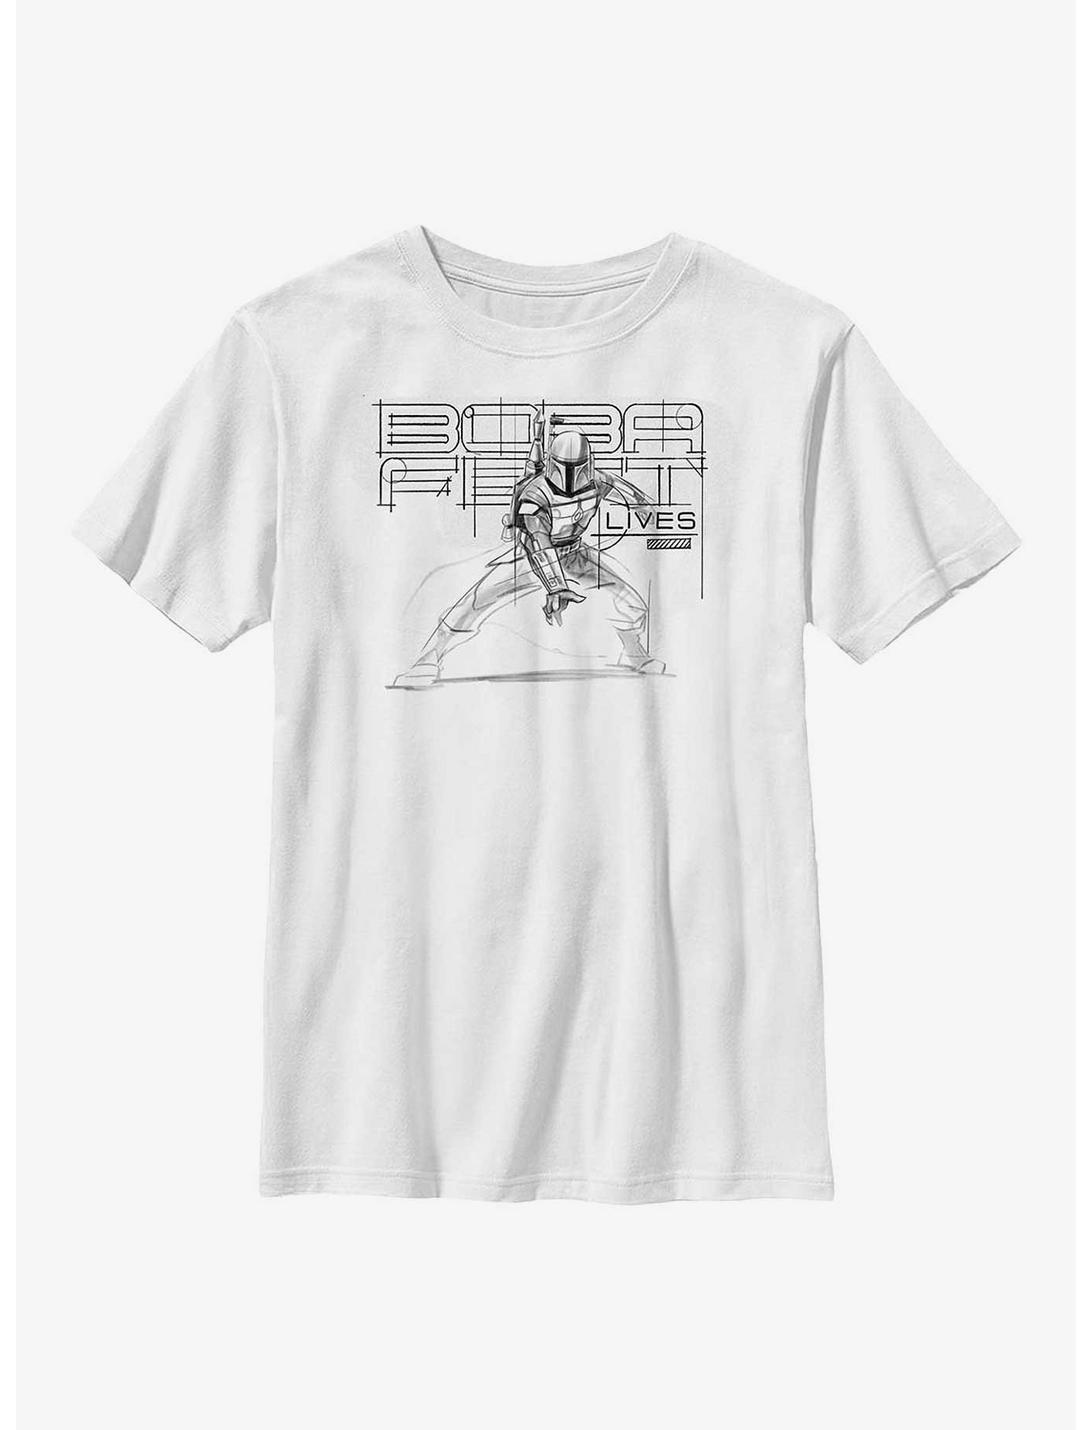 Star Wars: The Book Of Boba Fett Boba Fett Lives Pencil Sketch Youth T-Shirt, WHITE, hi-res